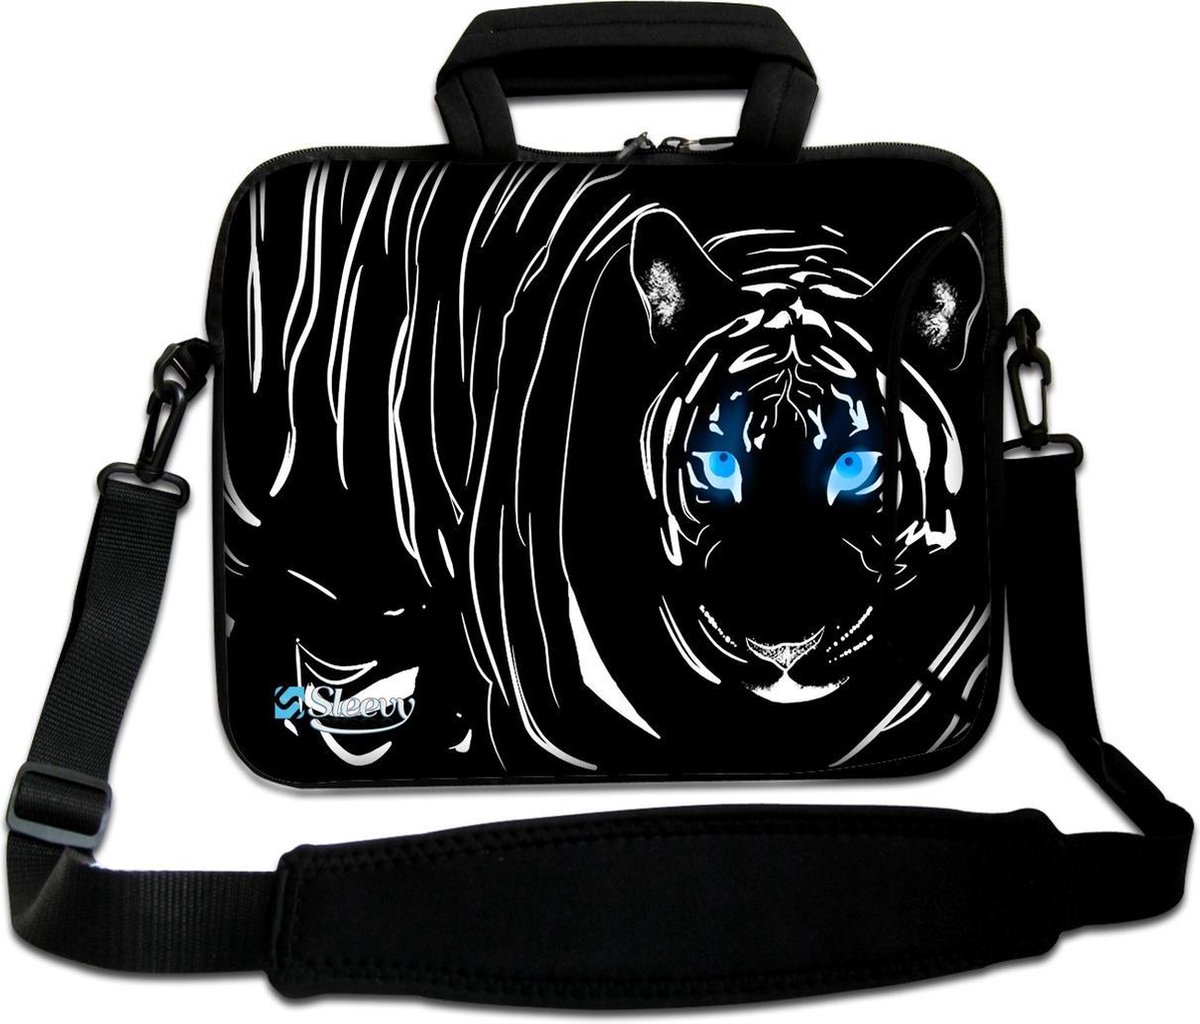 Sleevy 15,6 laptoptas zwarte tijger